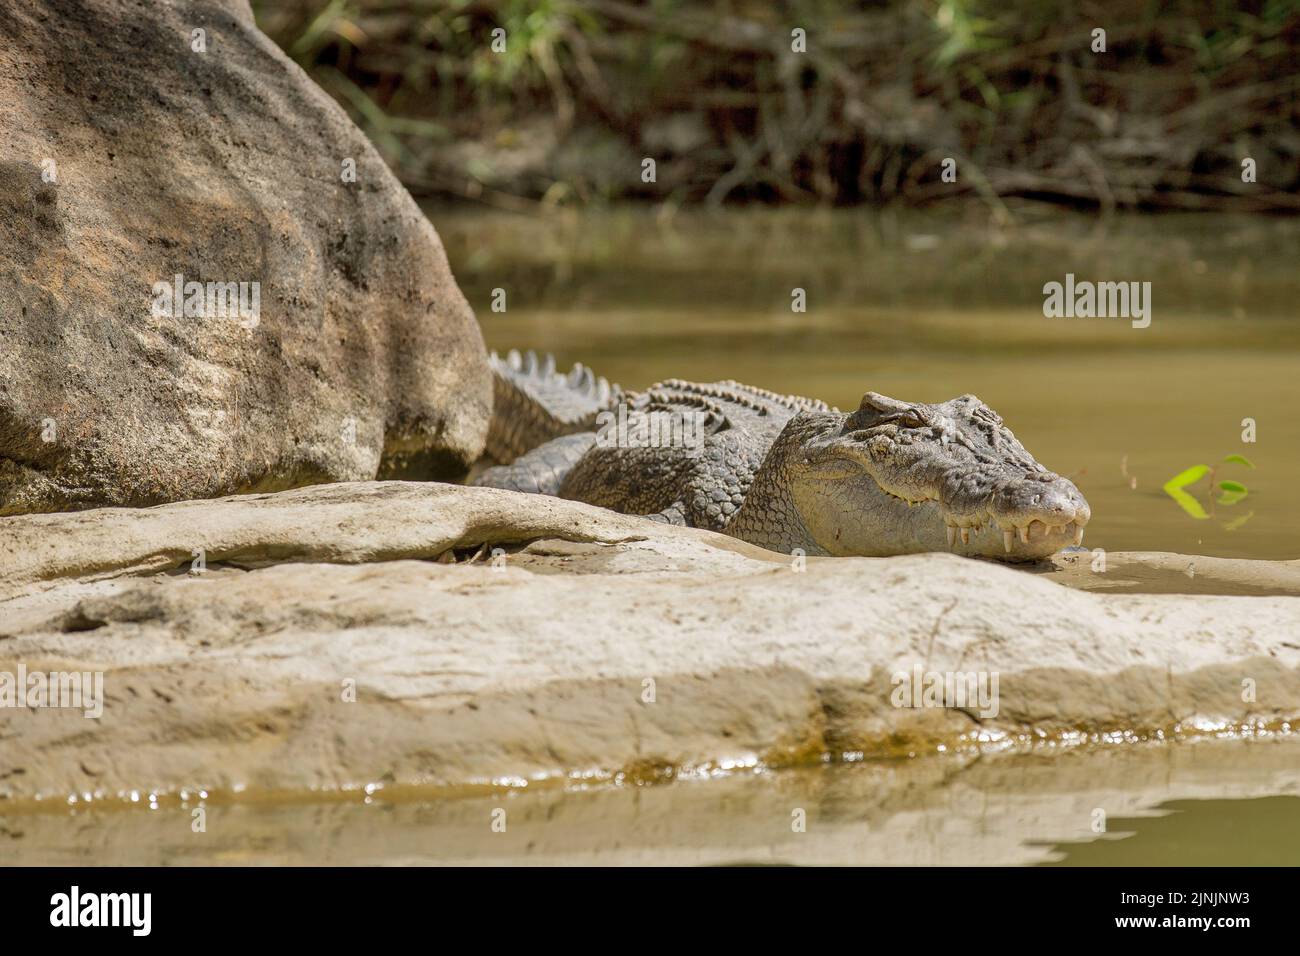 Cocodrilo de agua salada, cocodrilo estuarino (Crocodylus porosus), tumbado en una roca en la costa, Australia, Territorio del Norte, Kakadu Nationalpark Foto de stock